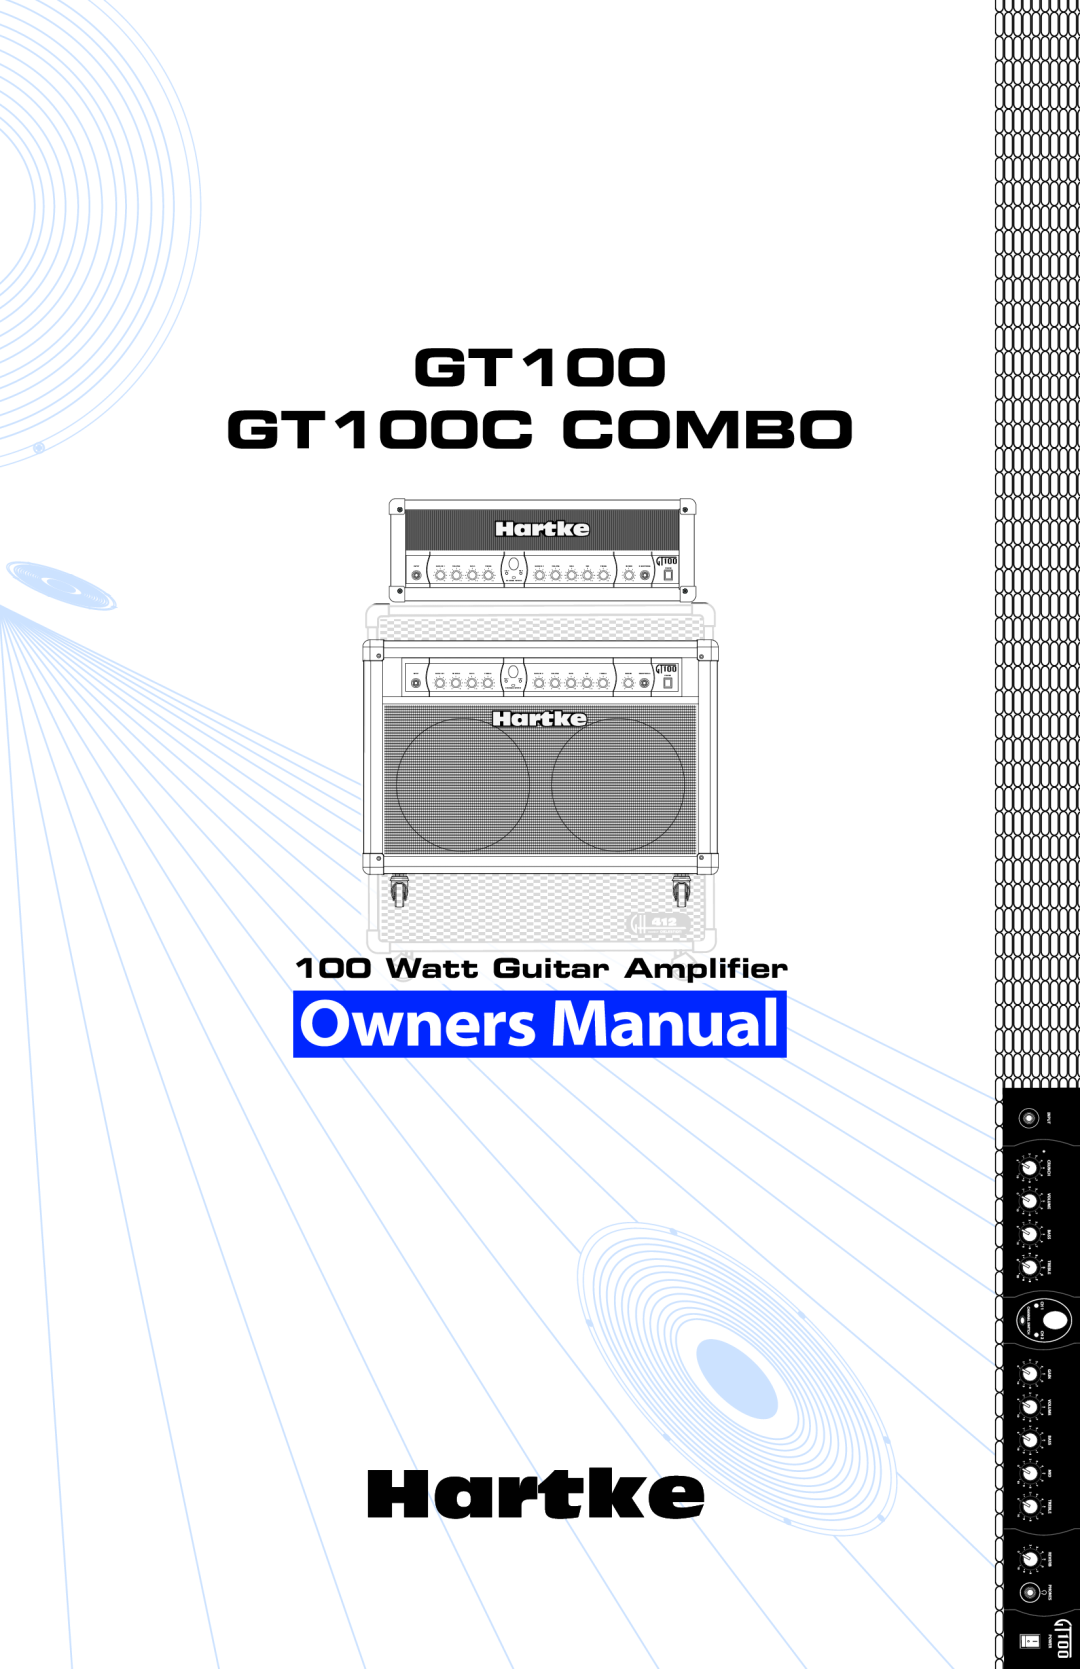 Samson manual Watt Guitar Amplifier, GT100 GT100C COMBO 